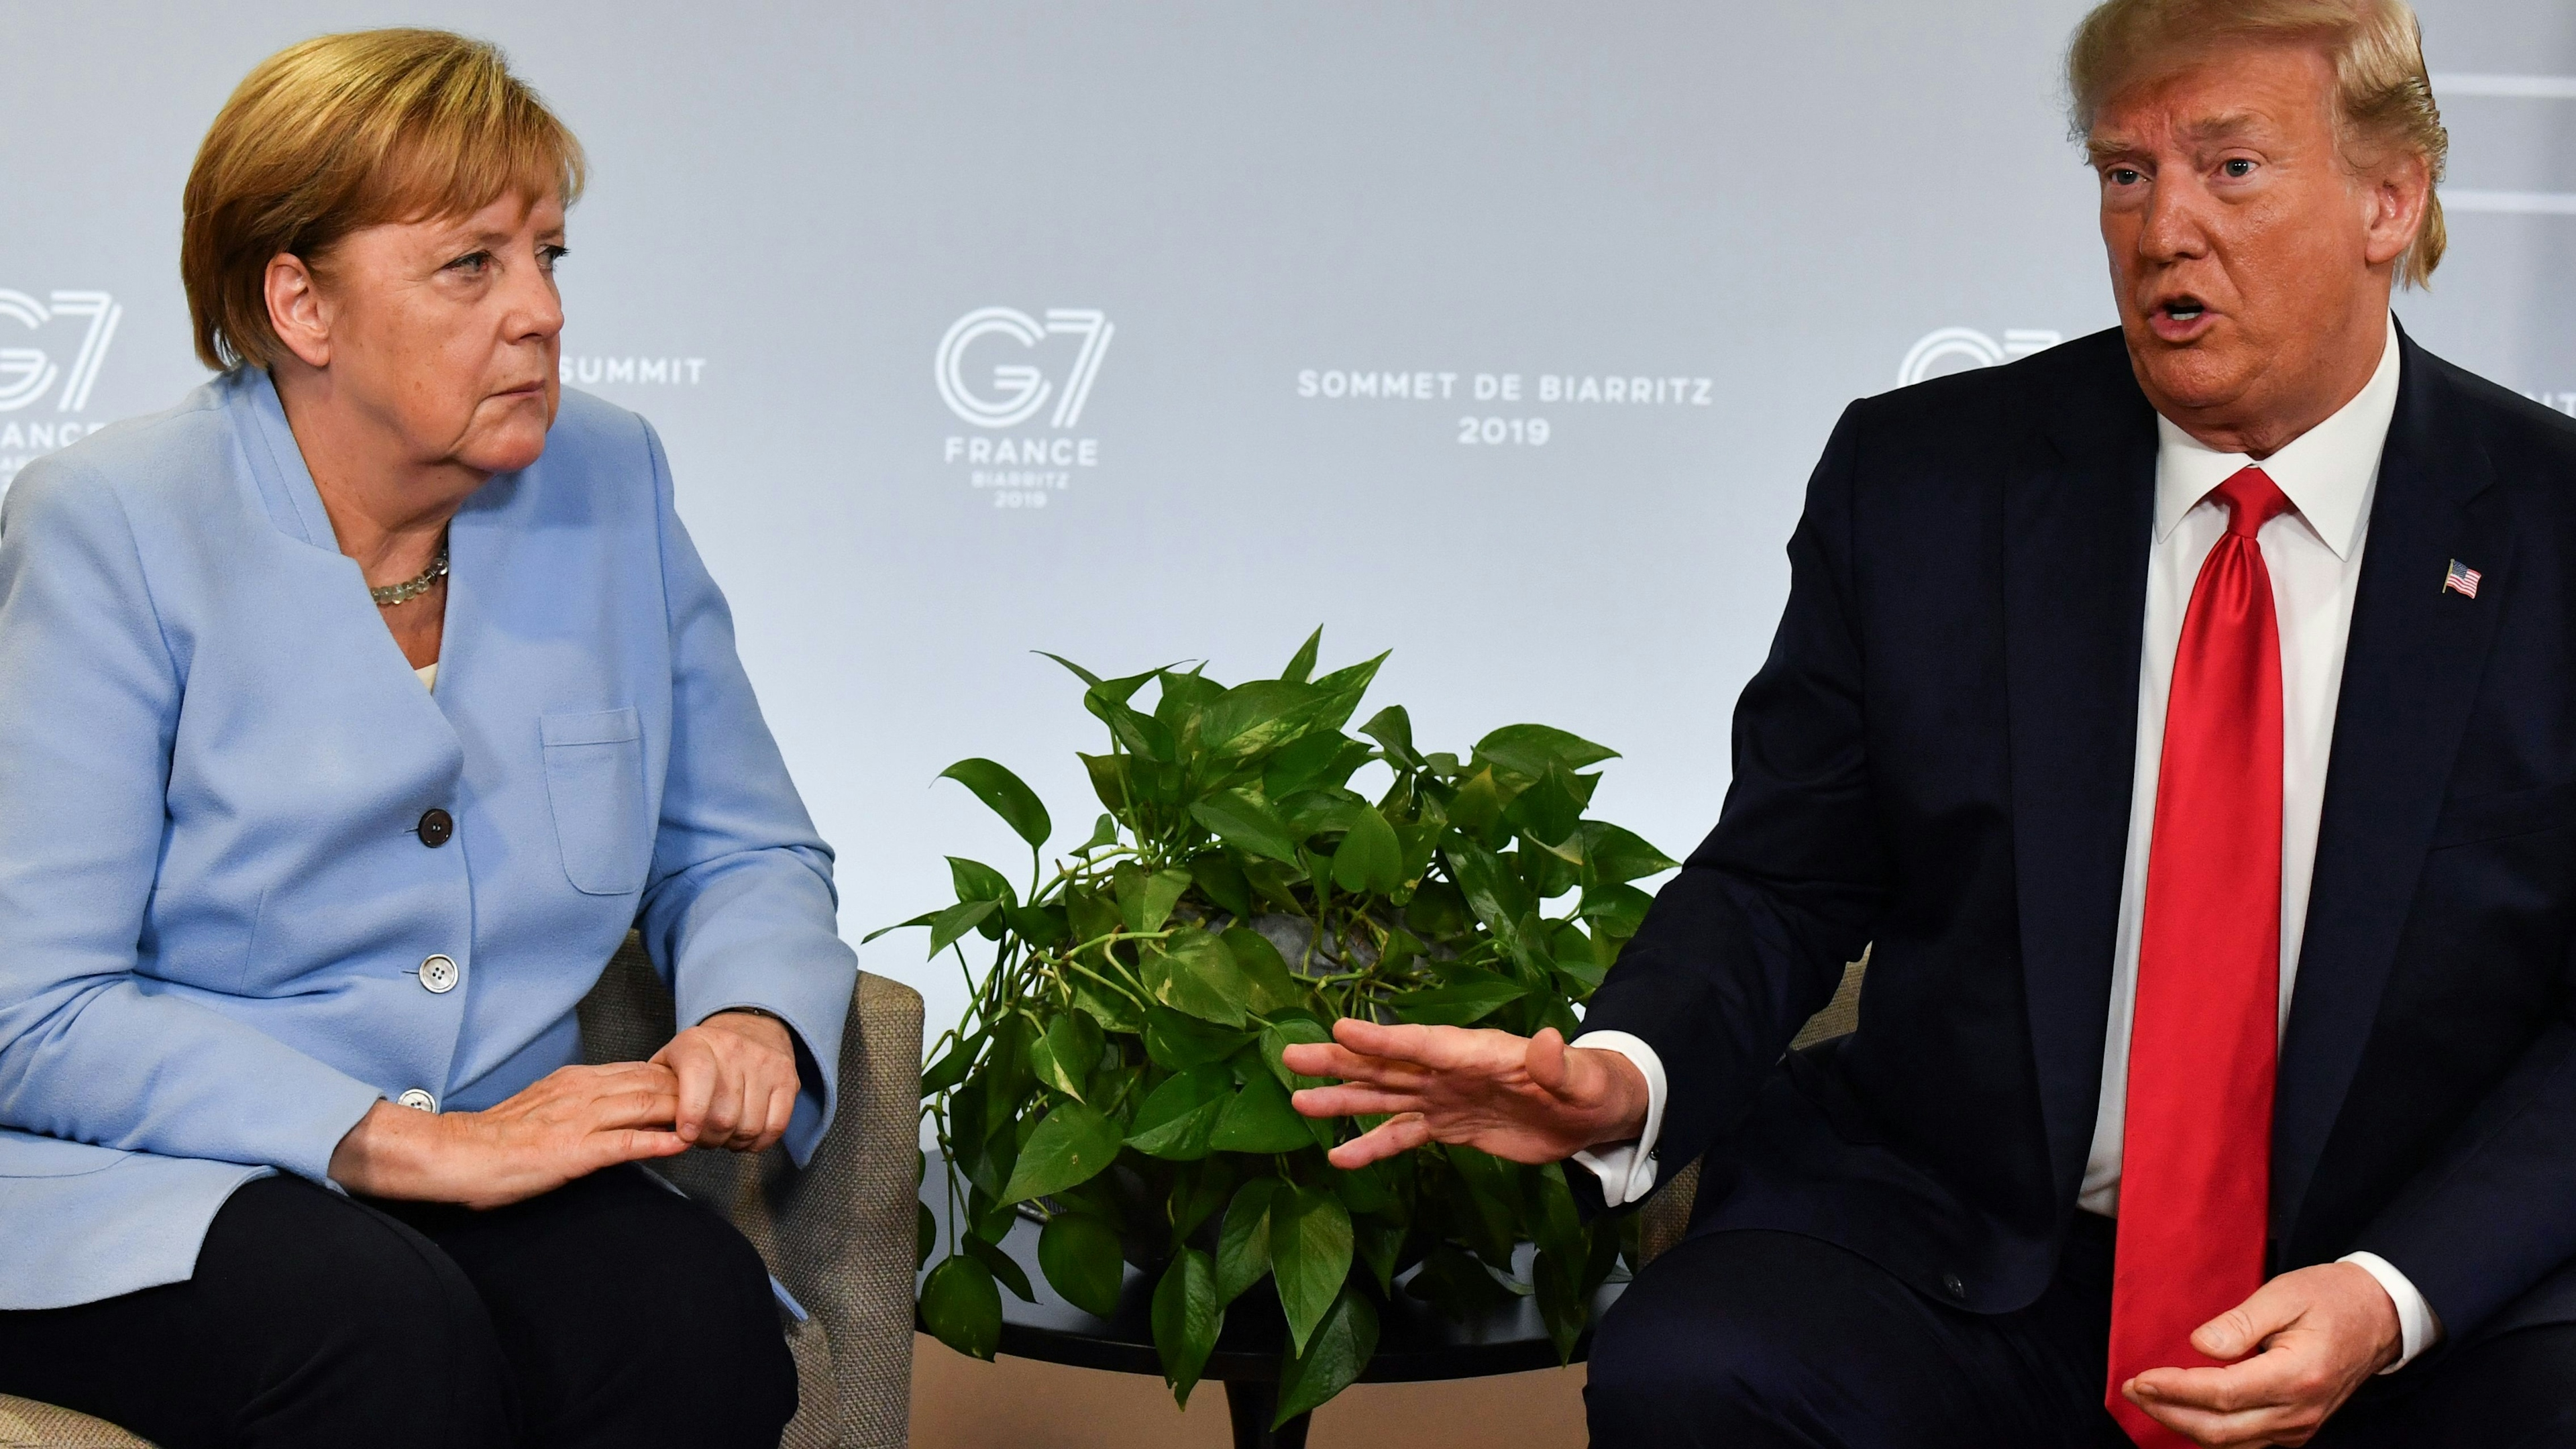 President Trump and German Chancellor Angela Merkel at the G7 summit